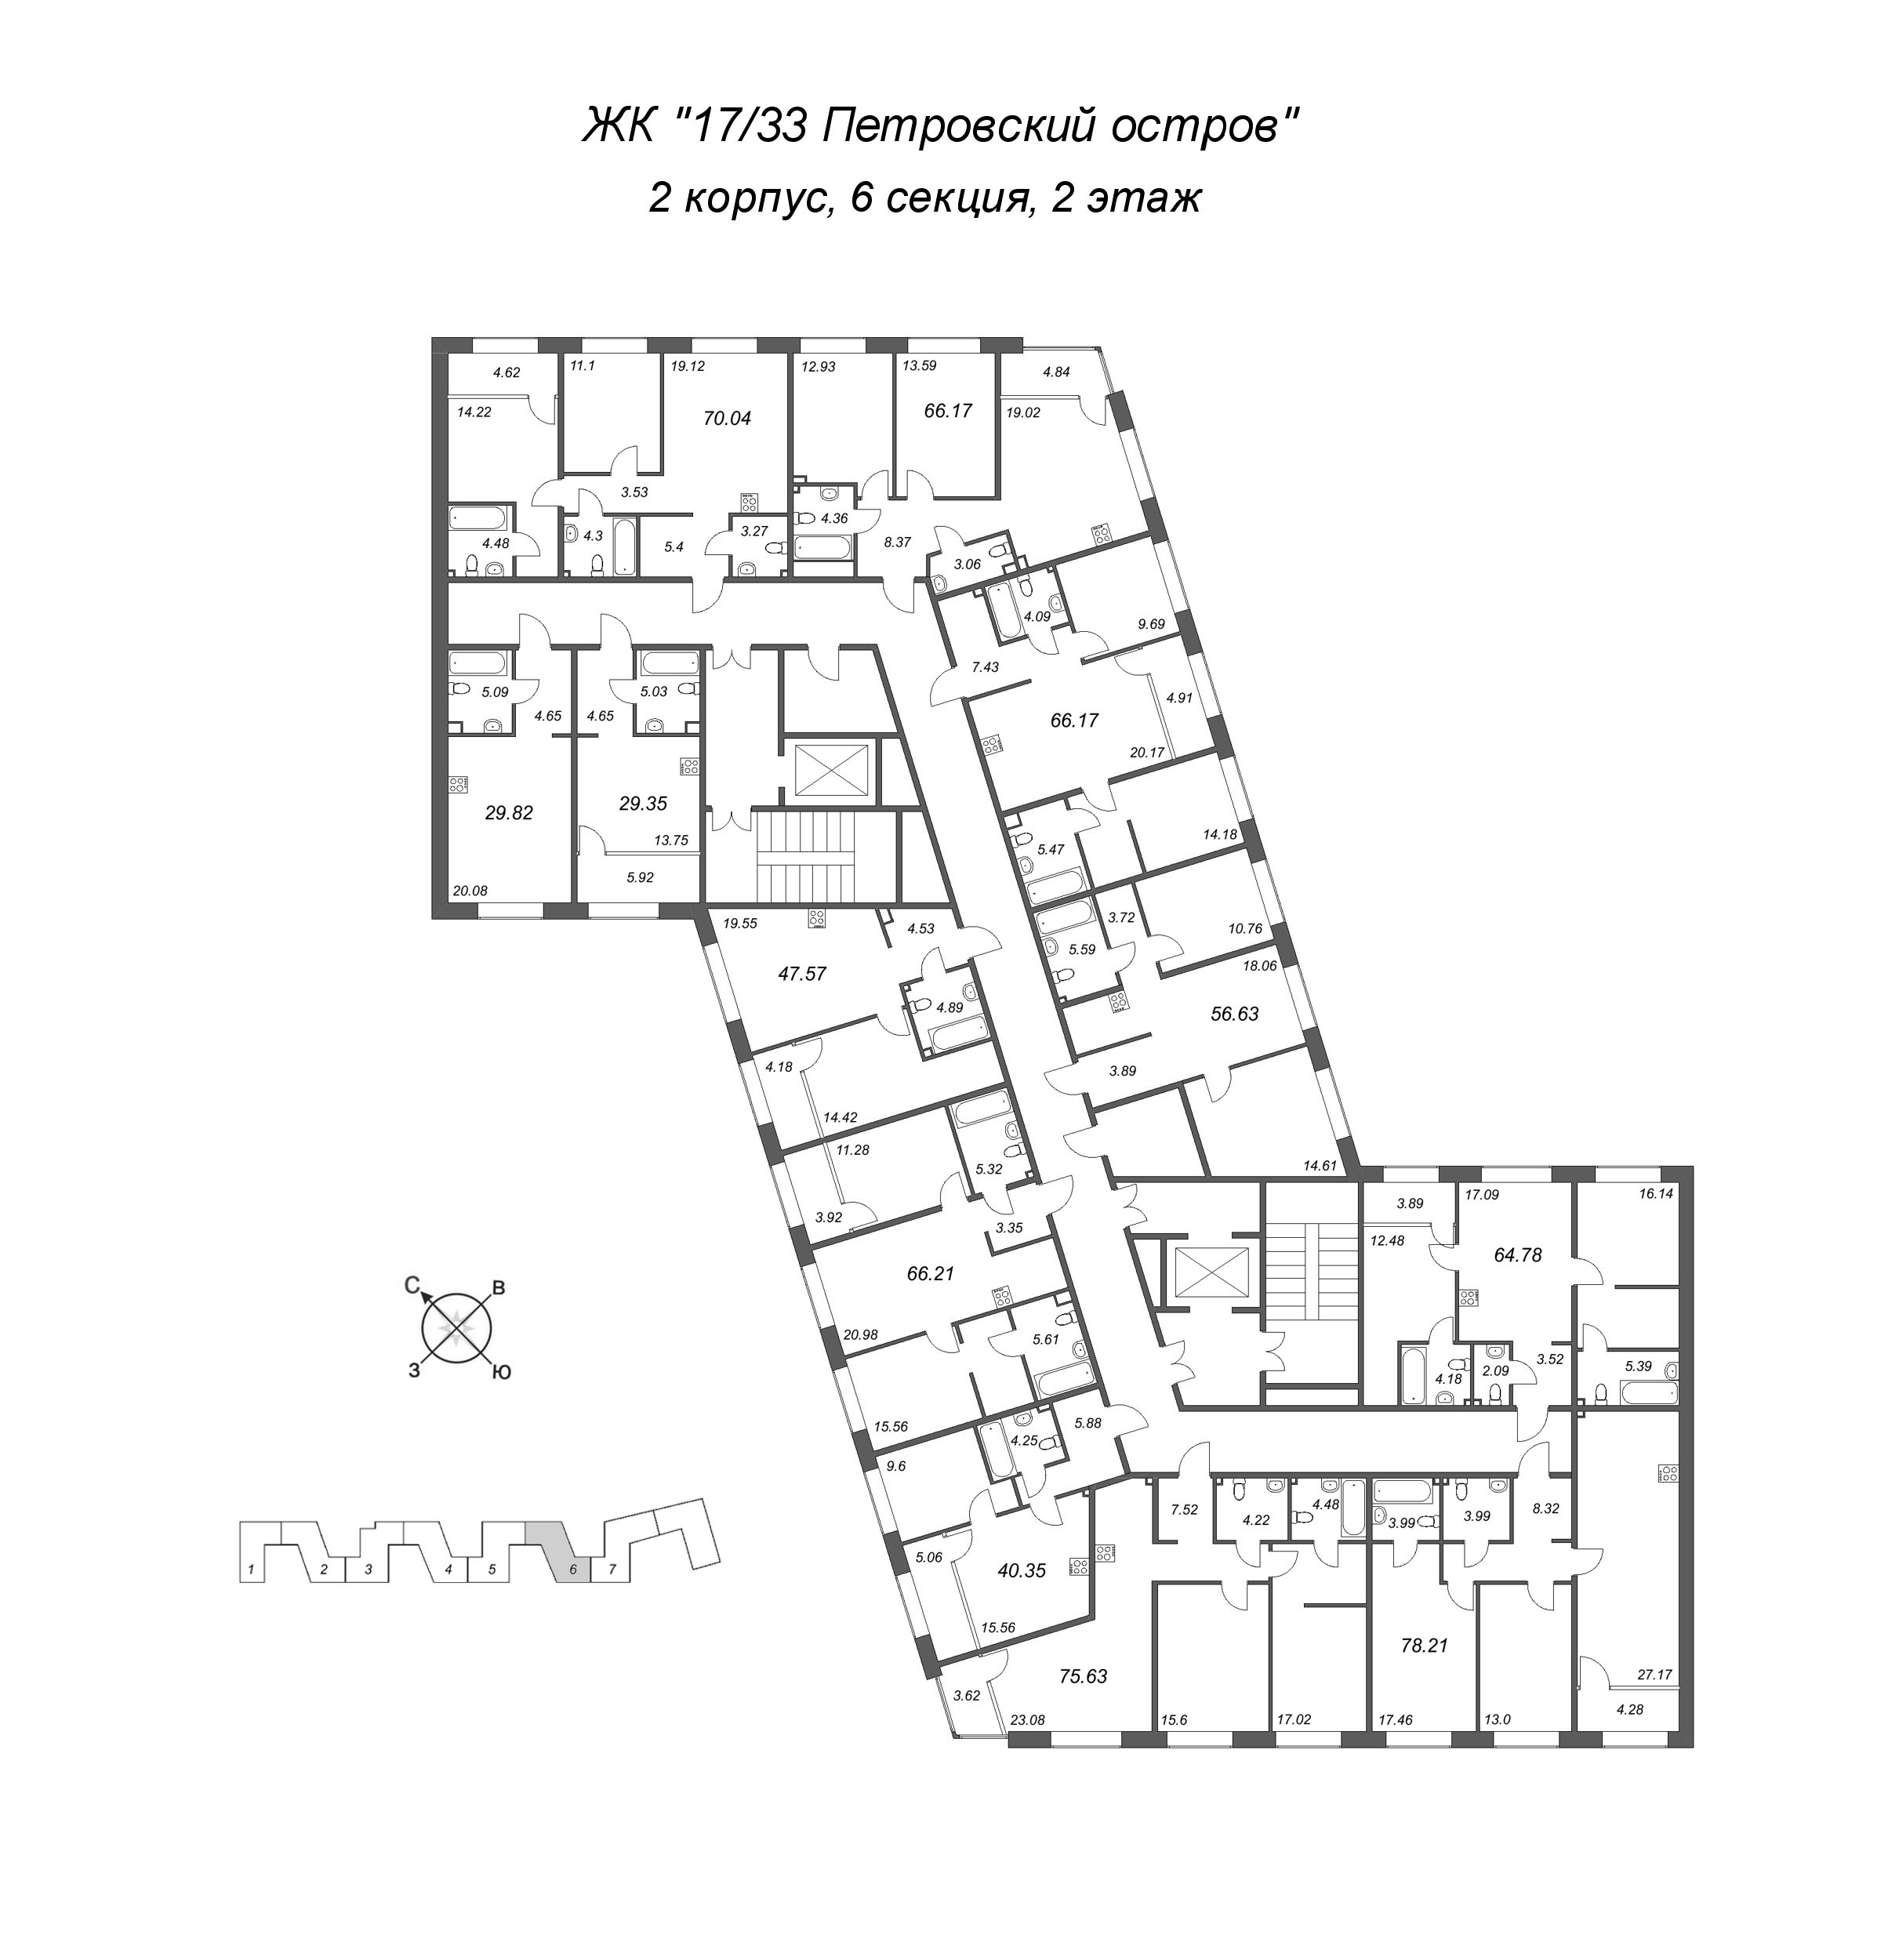 3-комнатная (Евро) квартира, 64.78 м² - планировка этажа